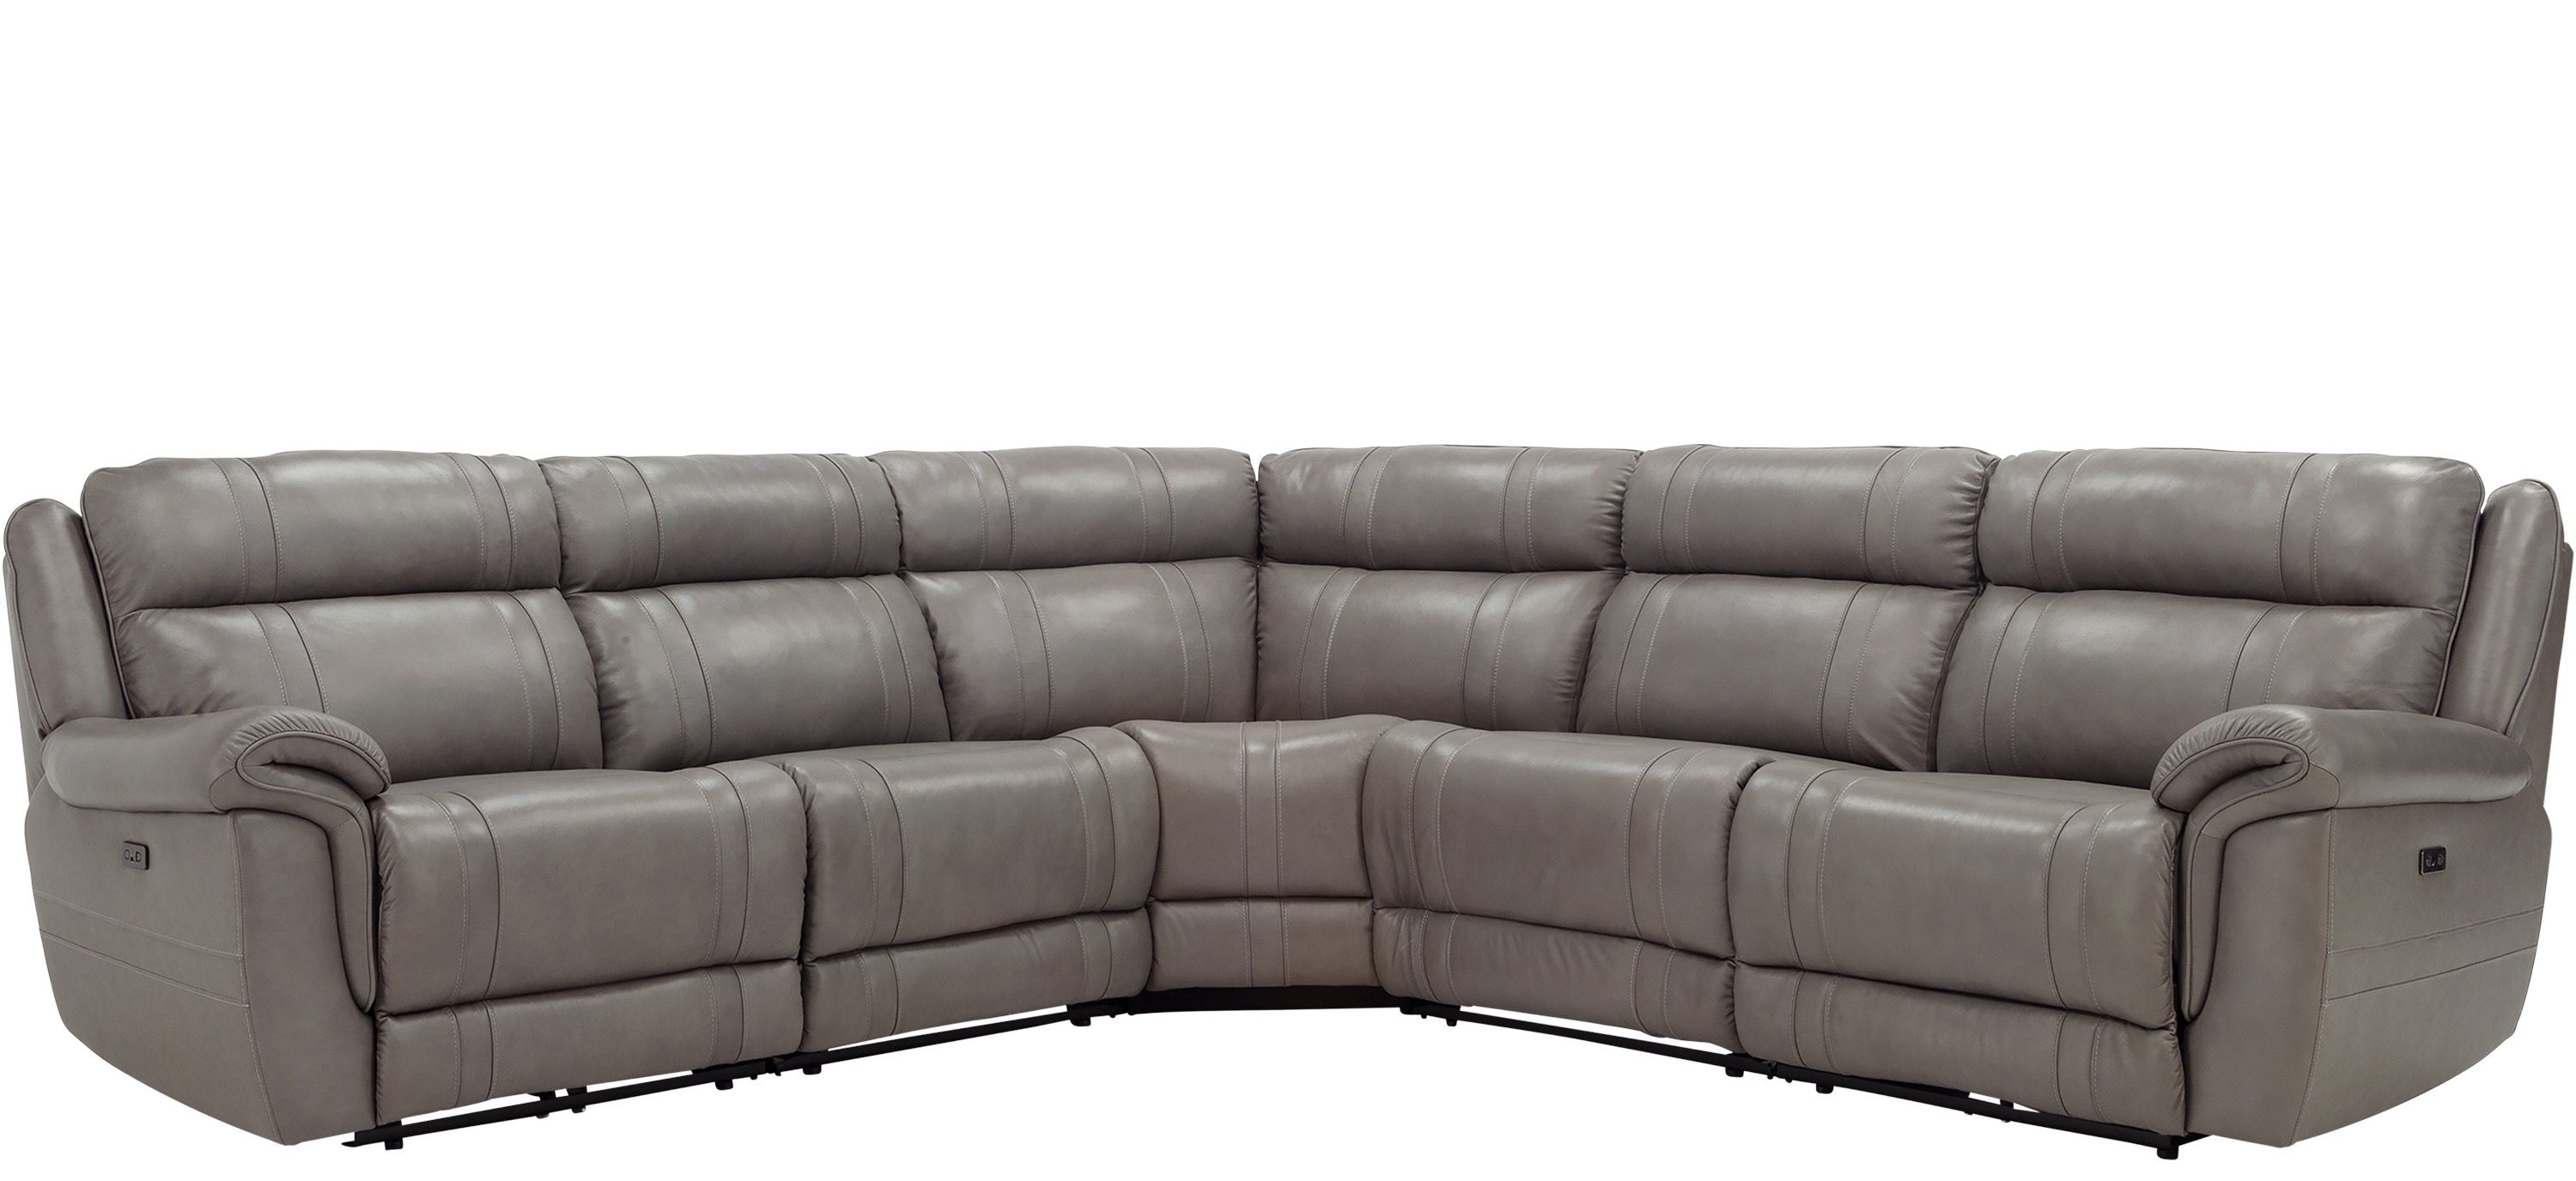 Ridgewood 5-pc. Leather Power-Reclining Sectional Sofa